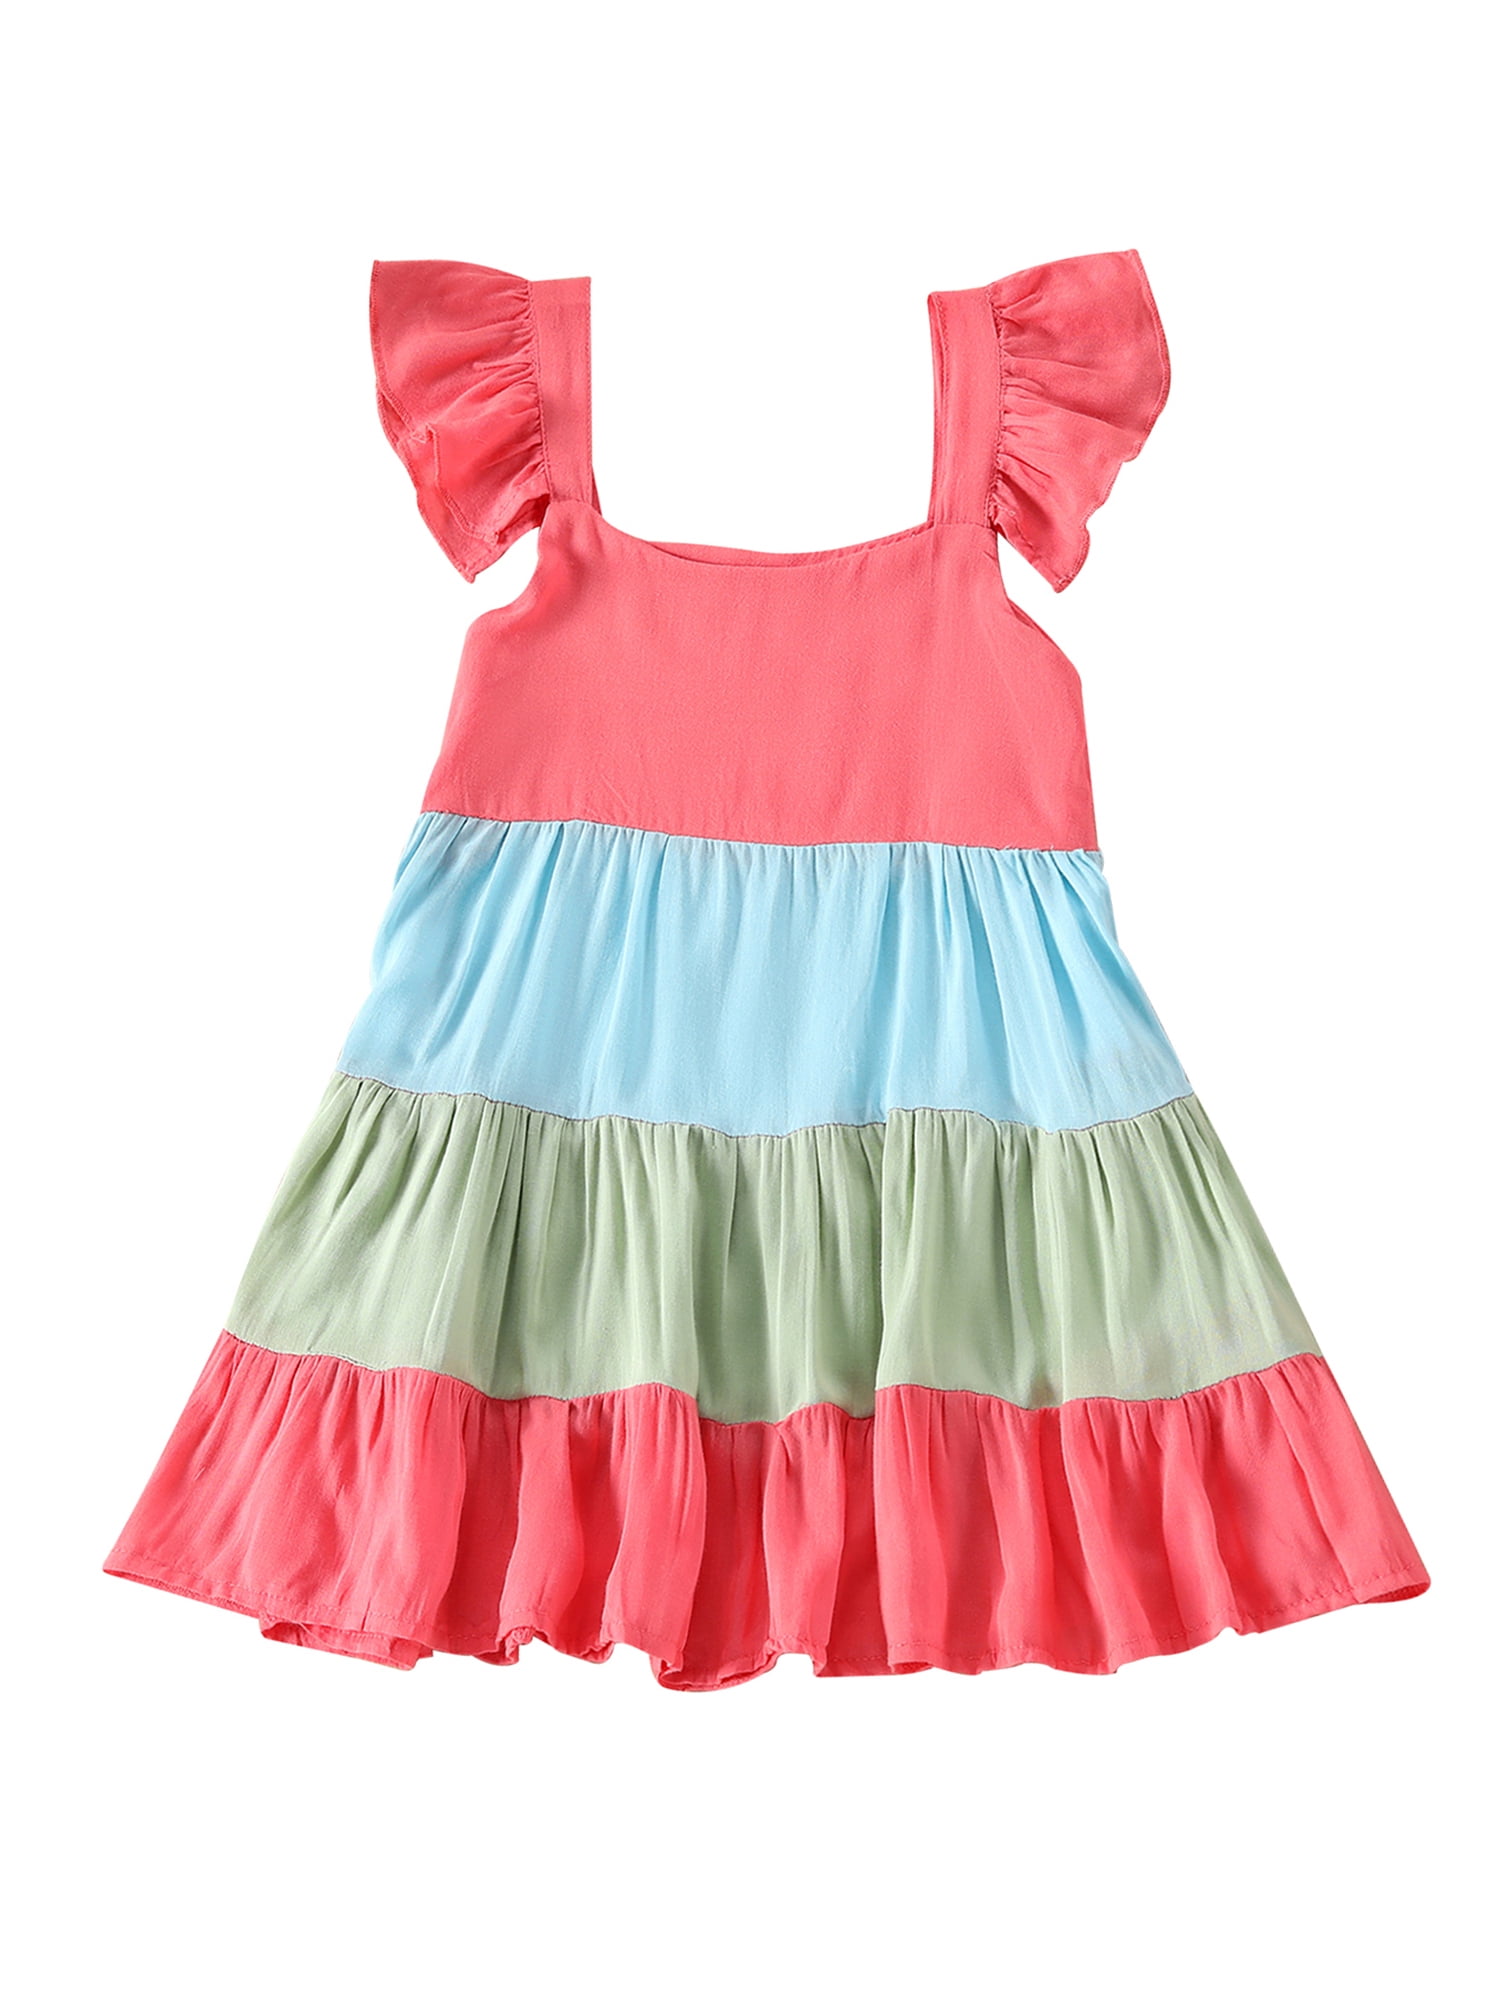 Infant Toddler Baby Girl Dress Summer Sleeveless Bowknot Floral Princess Skirt Ruffle Strap Sundress Casual Dresses 